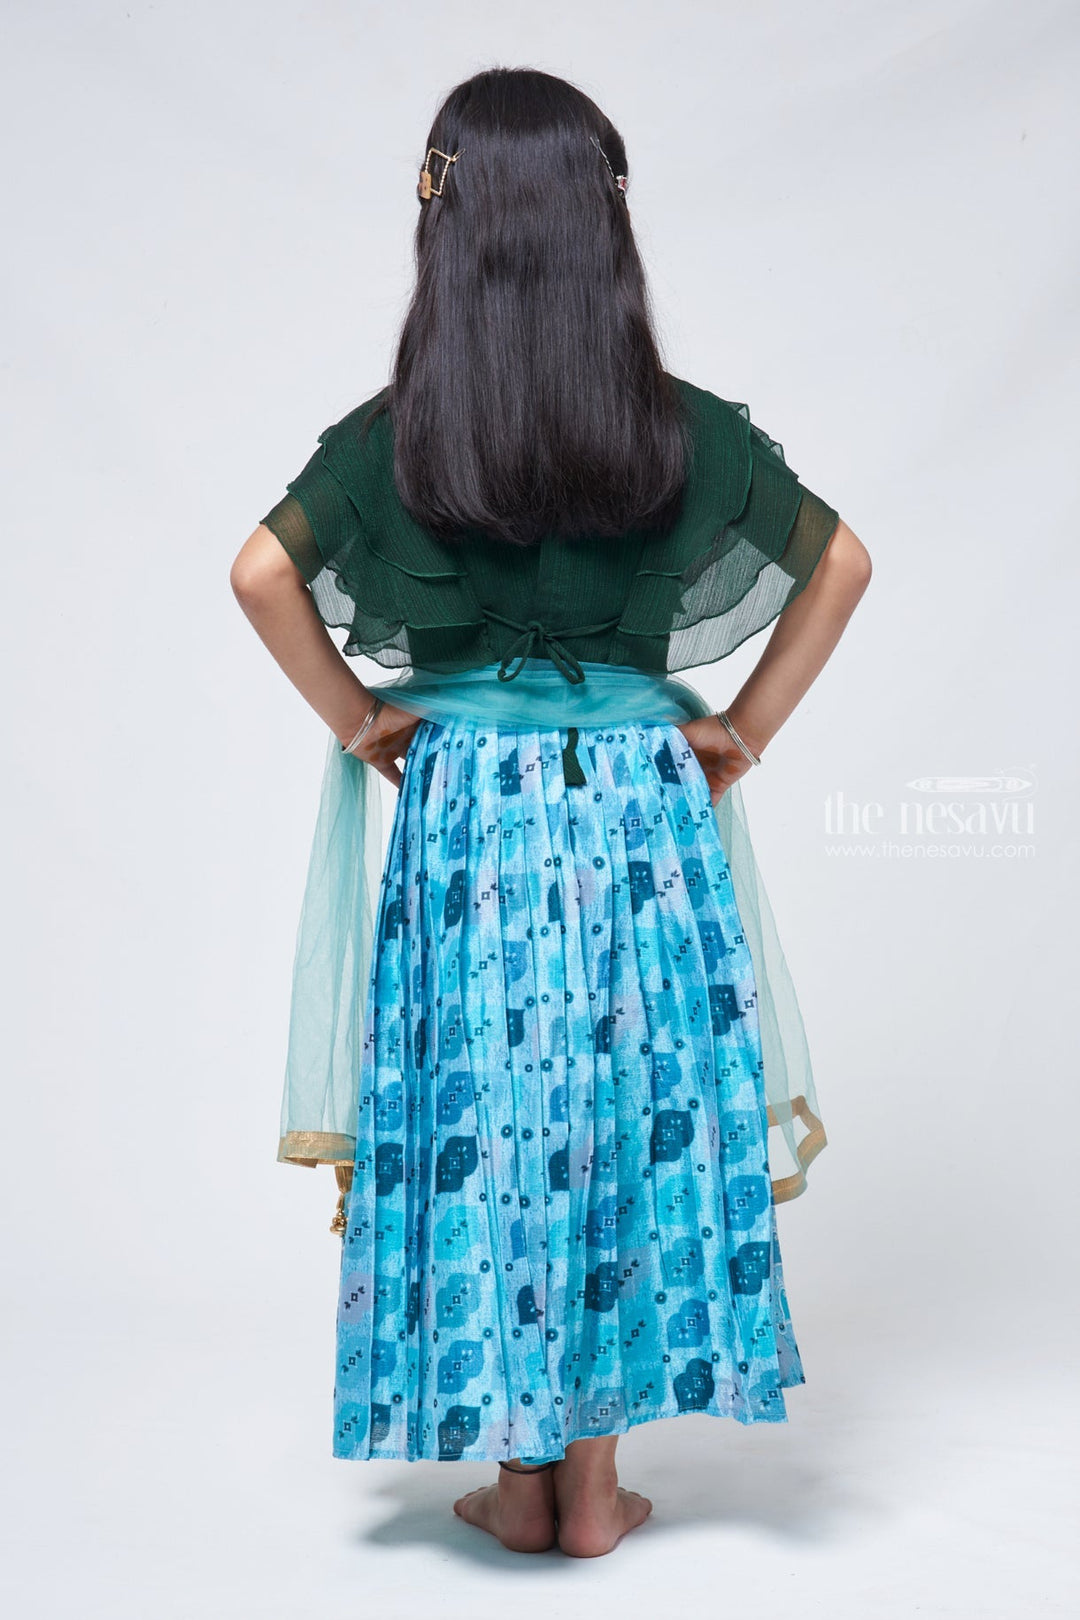 The Nesavu Lehenga & Ghagra Emerald Enchantment Rhinestone Green Top & Embroidered Blue Ghagra for Girls Nesavu Embroidered Lehenga for Girls | Festive Wear for Girls | the Nesavu